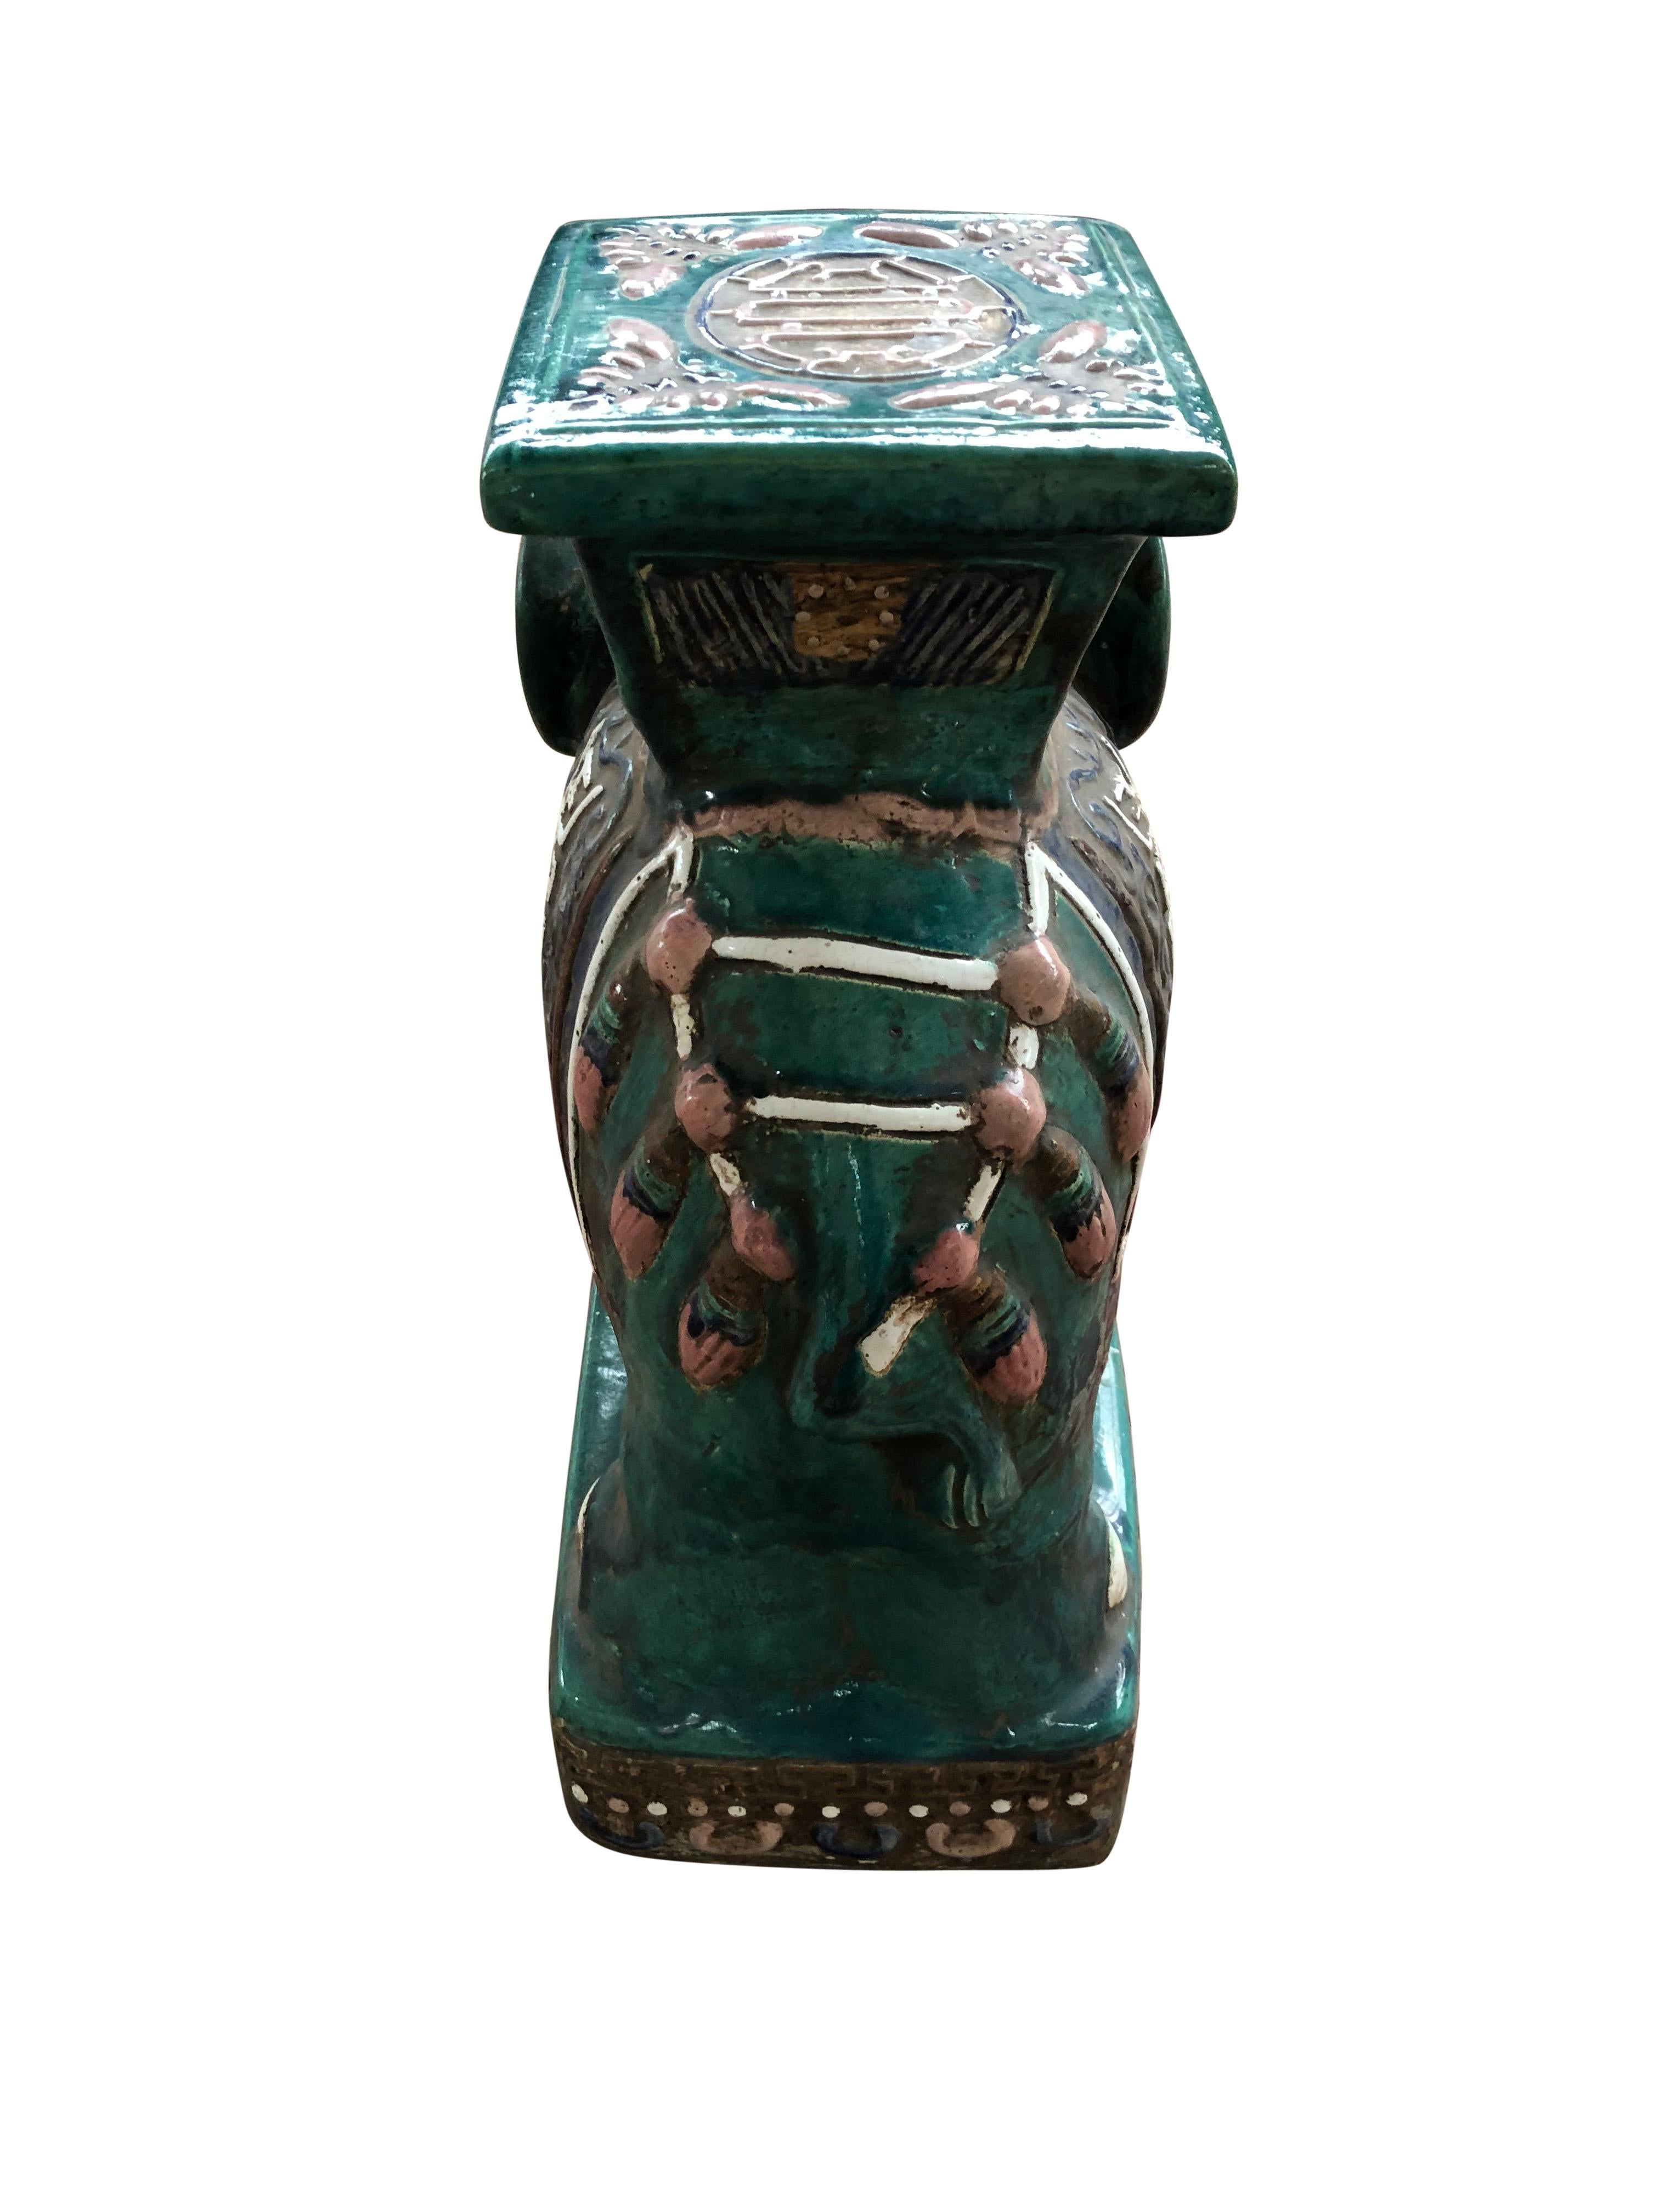 Large Vintage Chinese Ceramic Elephant Pedestal, 20th Century For Sale 3